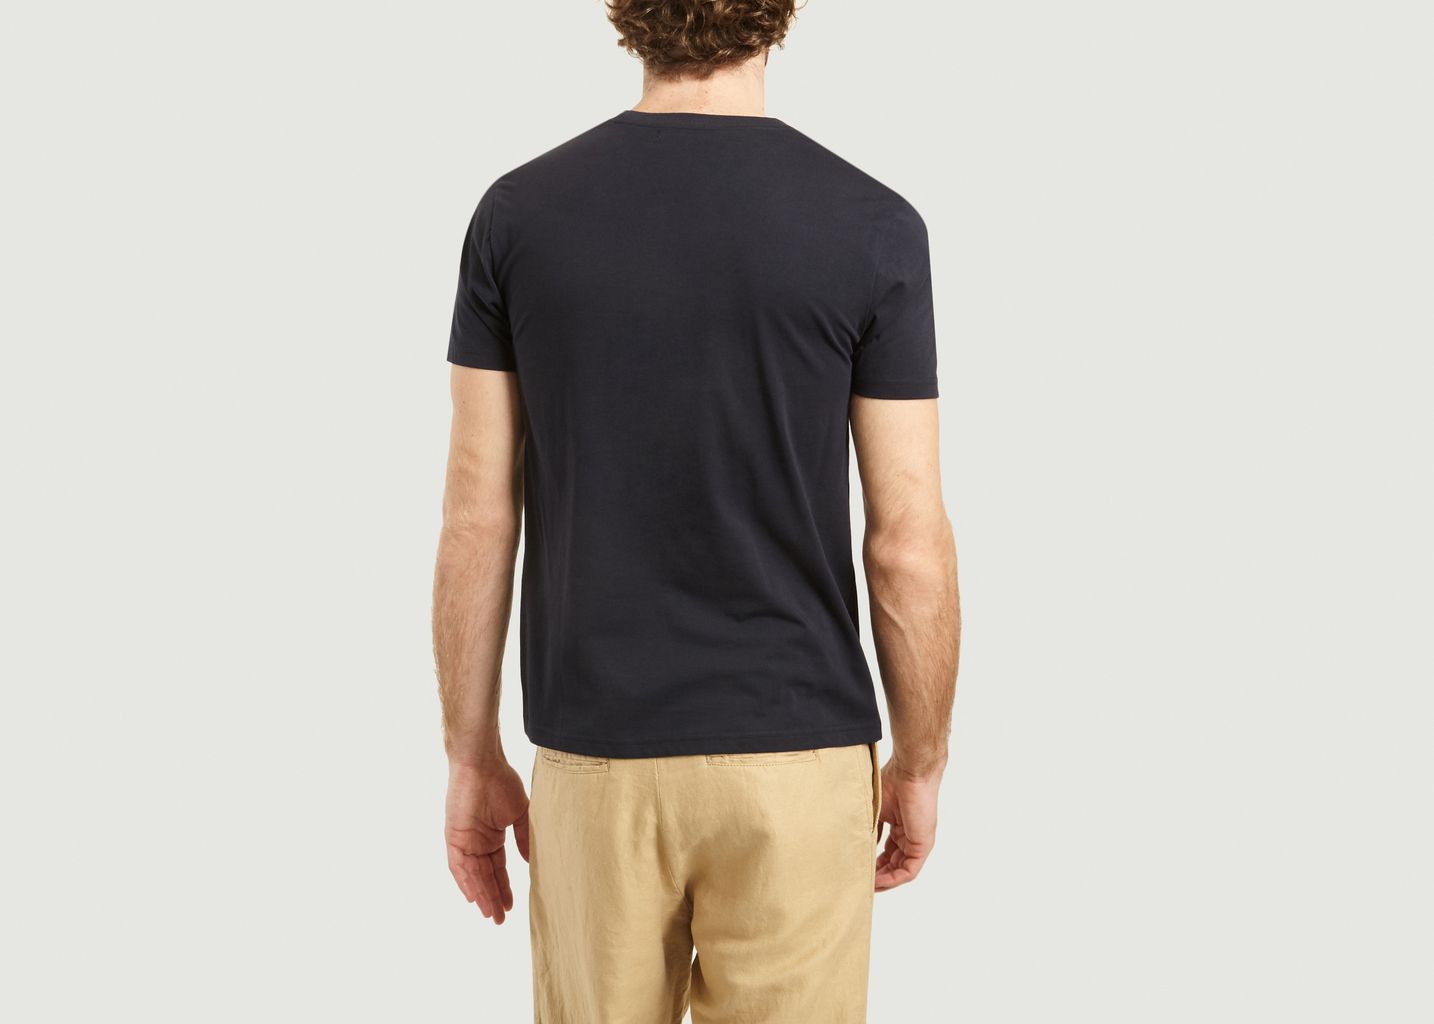 Organic Cotton Alex T-Shirt - Olow